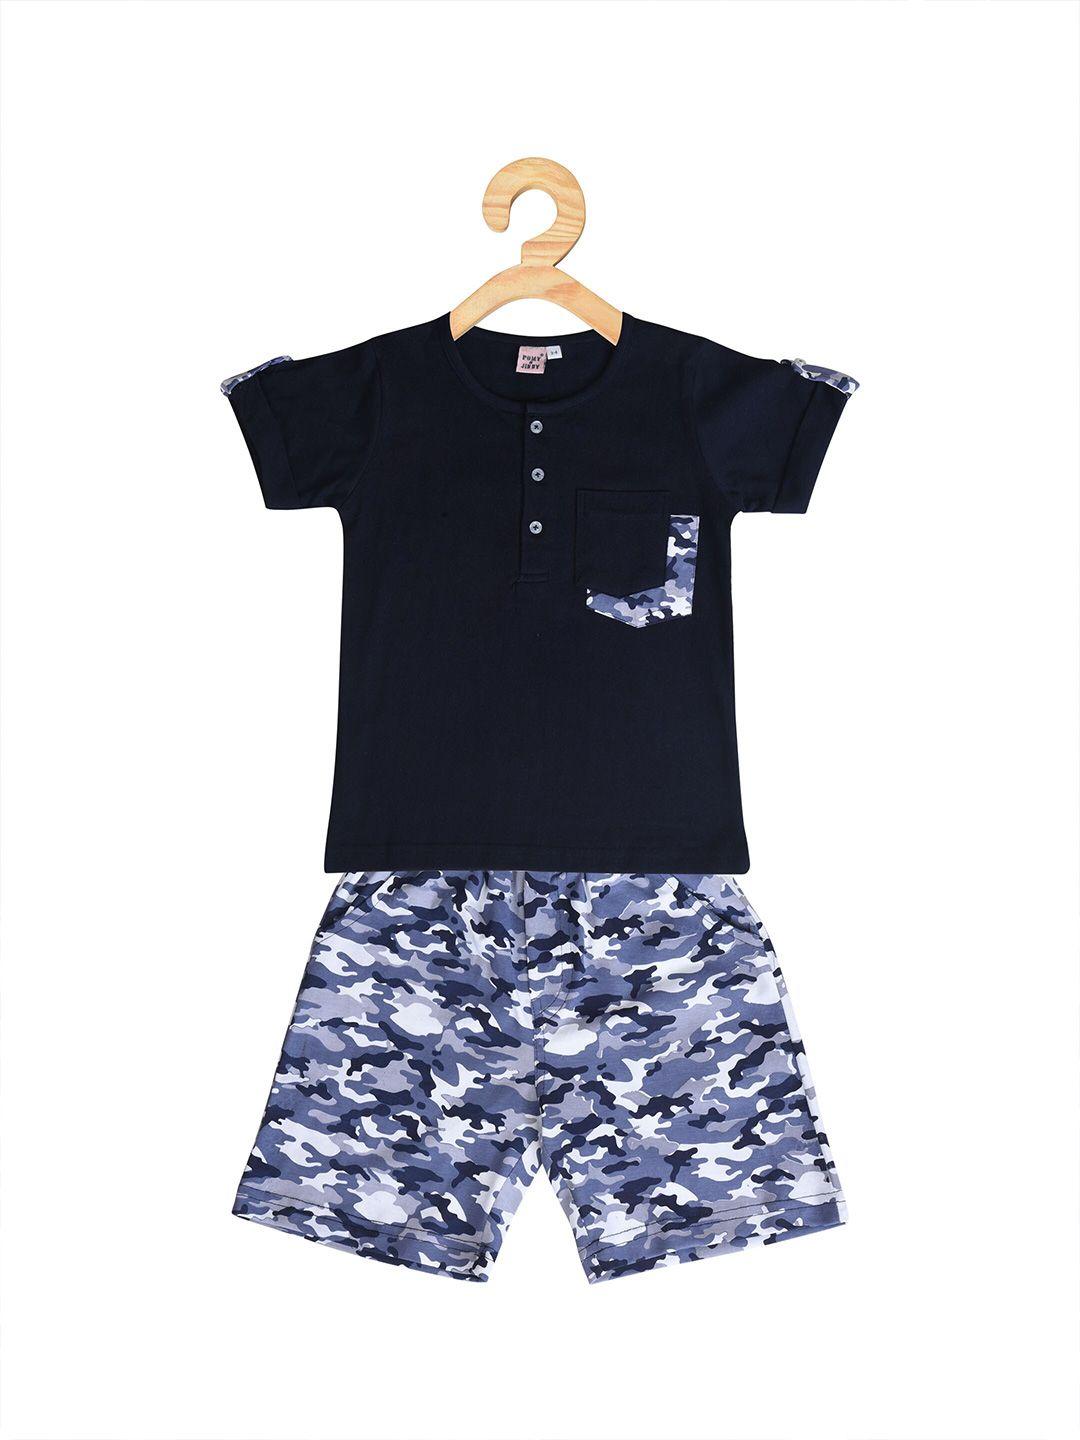 pomy & jinny boys navy blue & white printed t-shirt with shorts